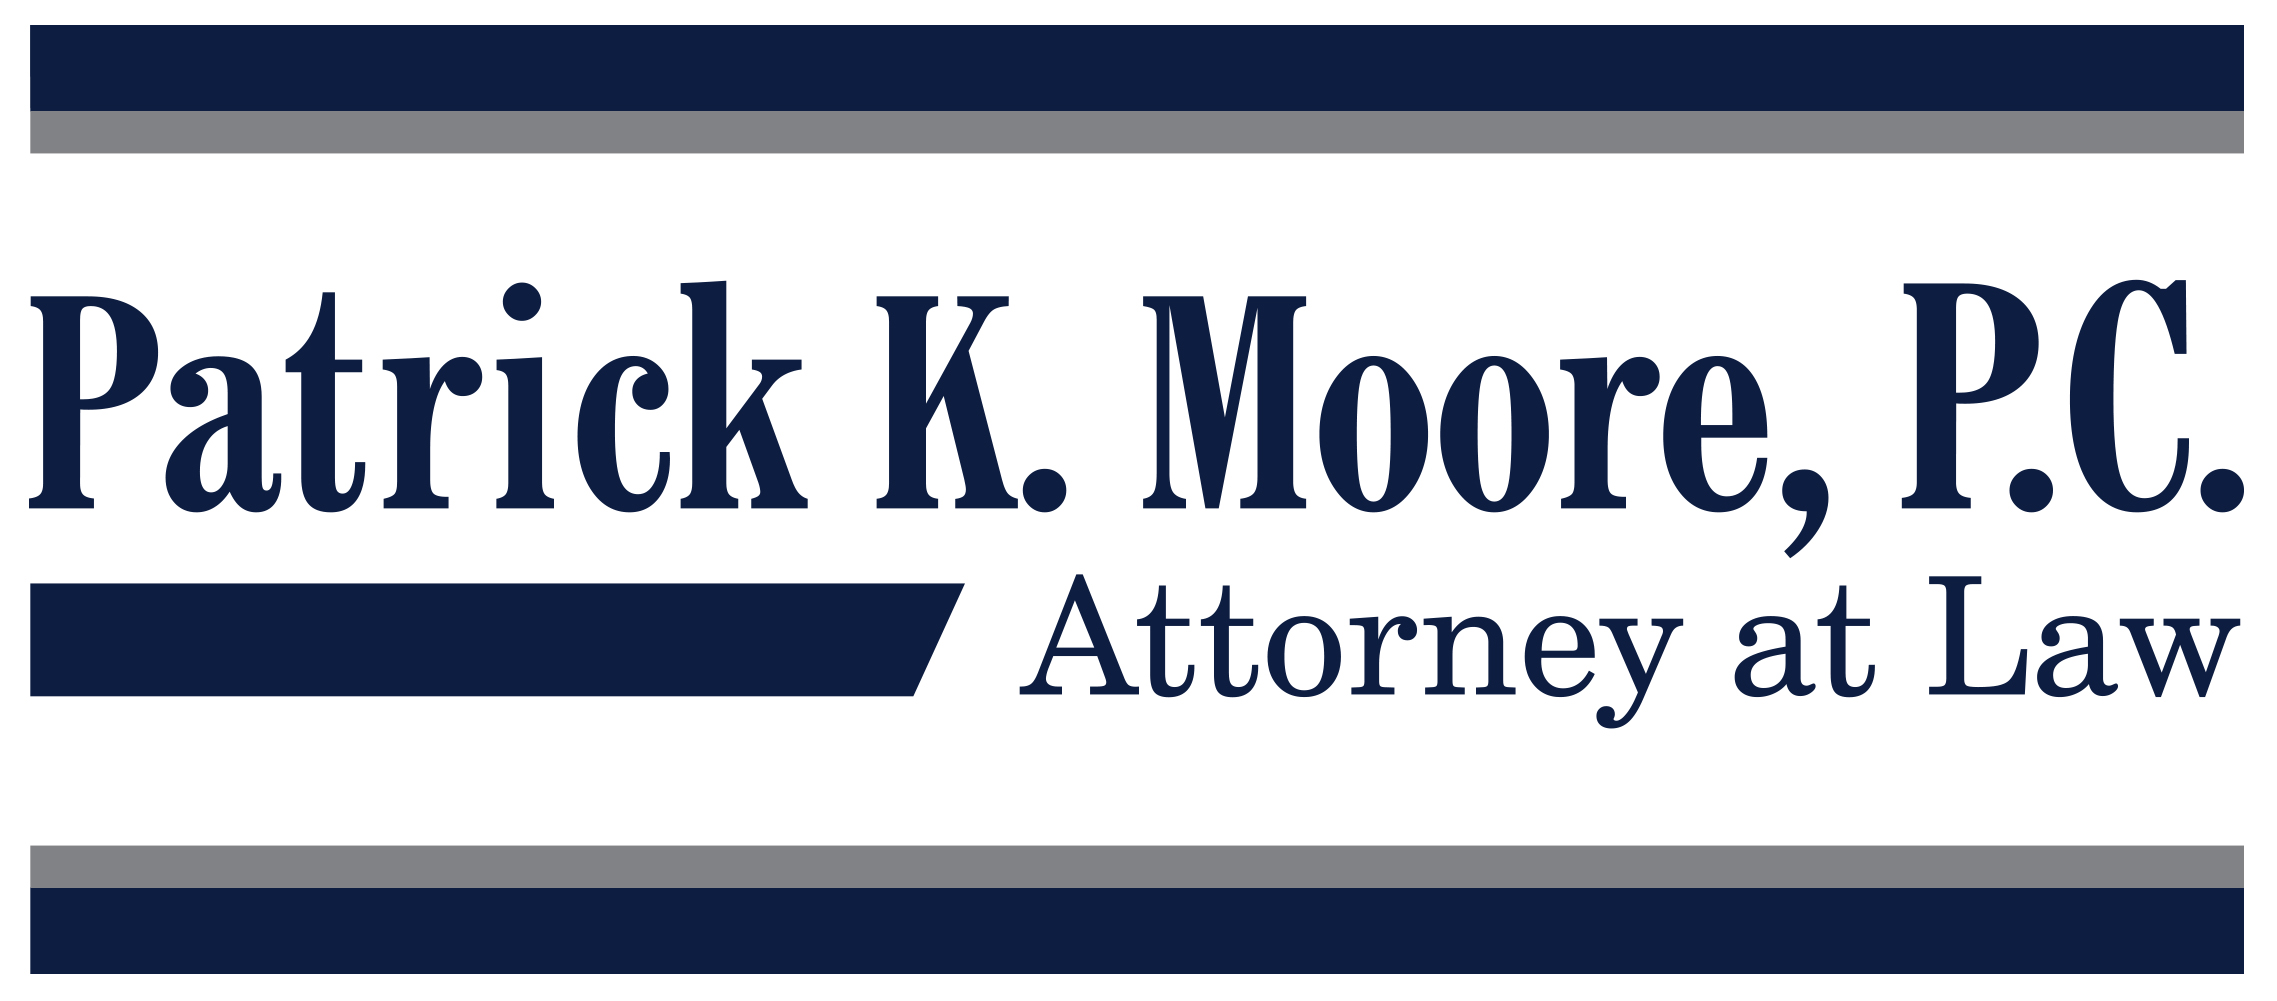 Patrick Moore logo.jpg